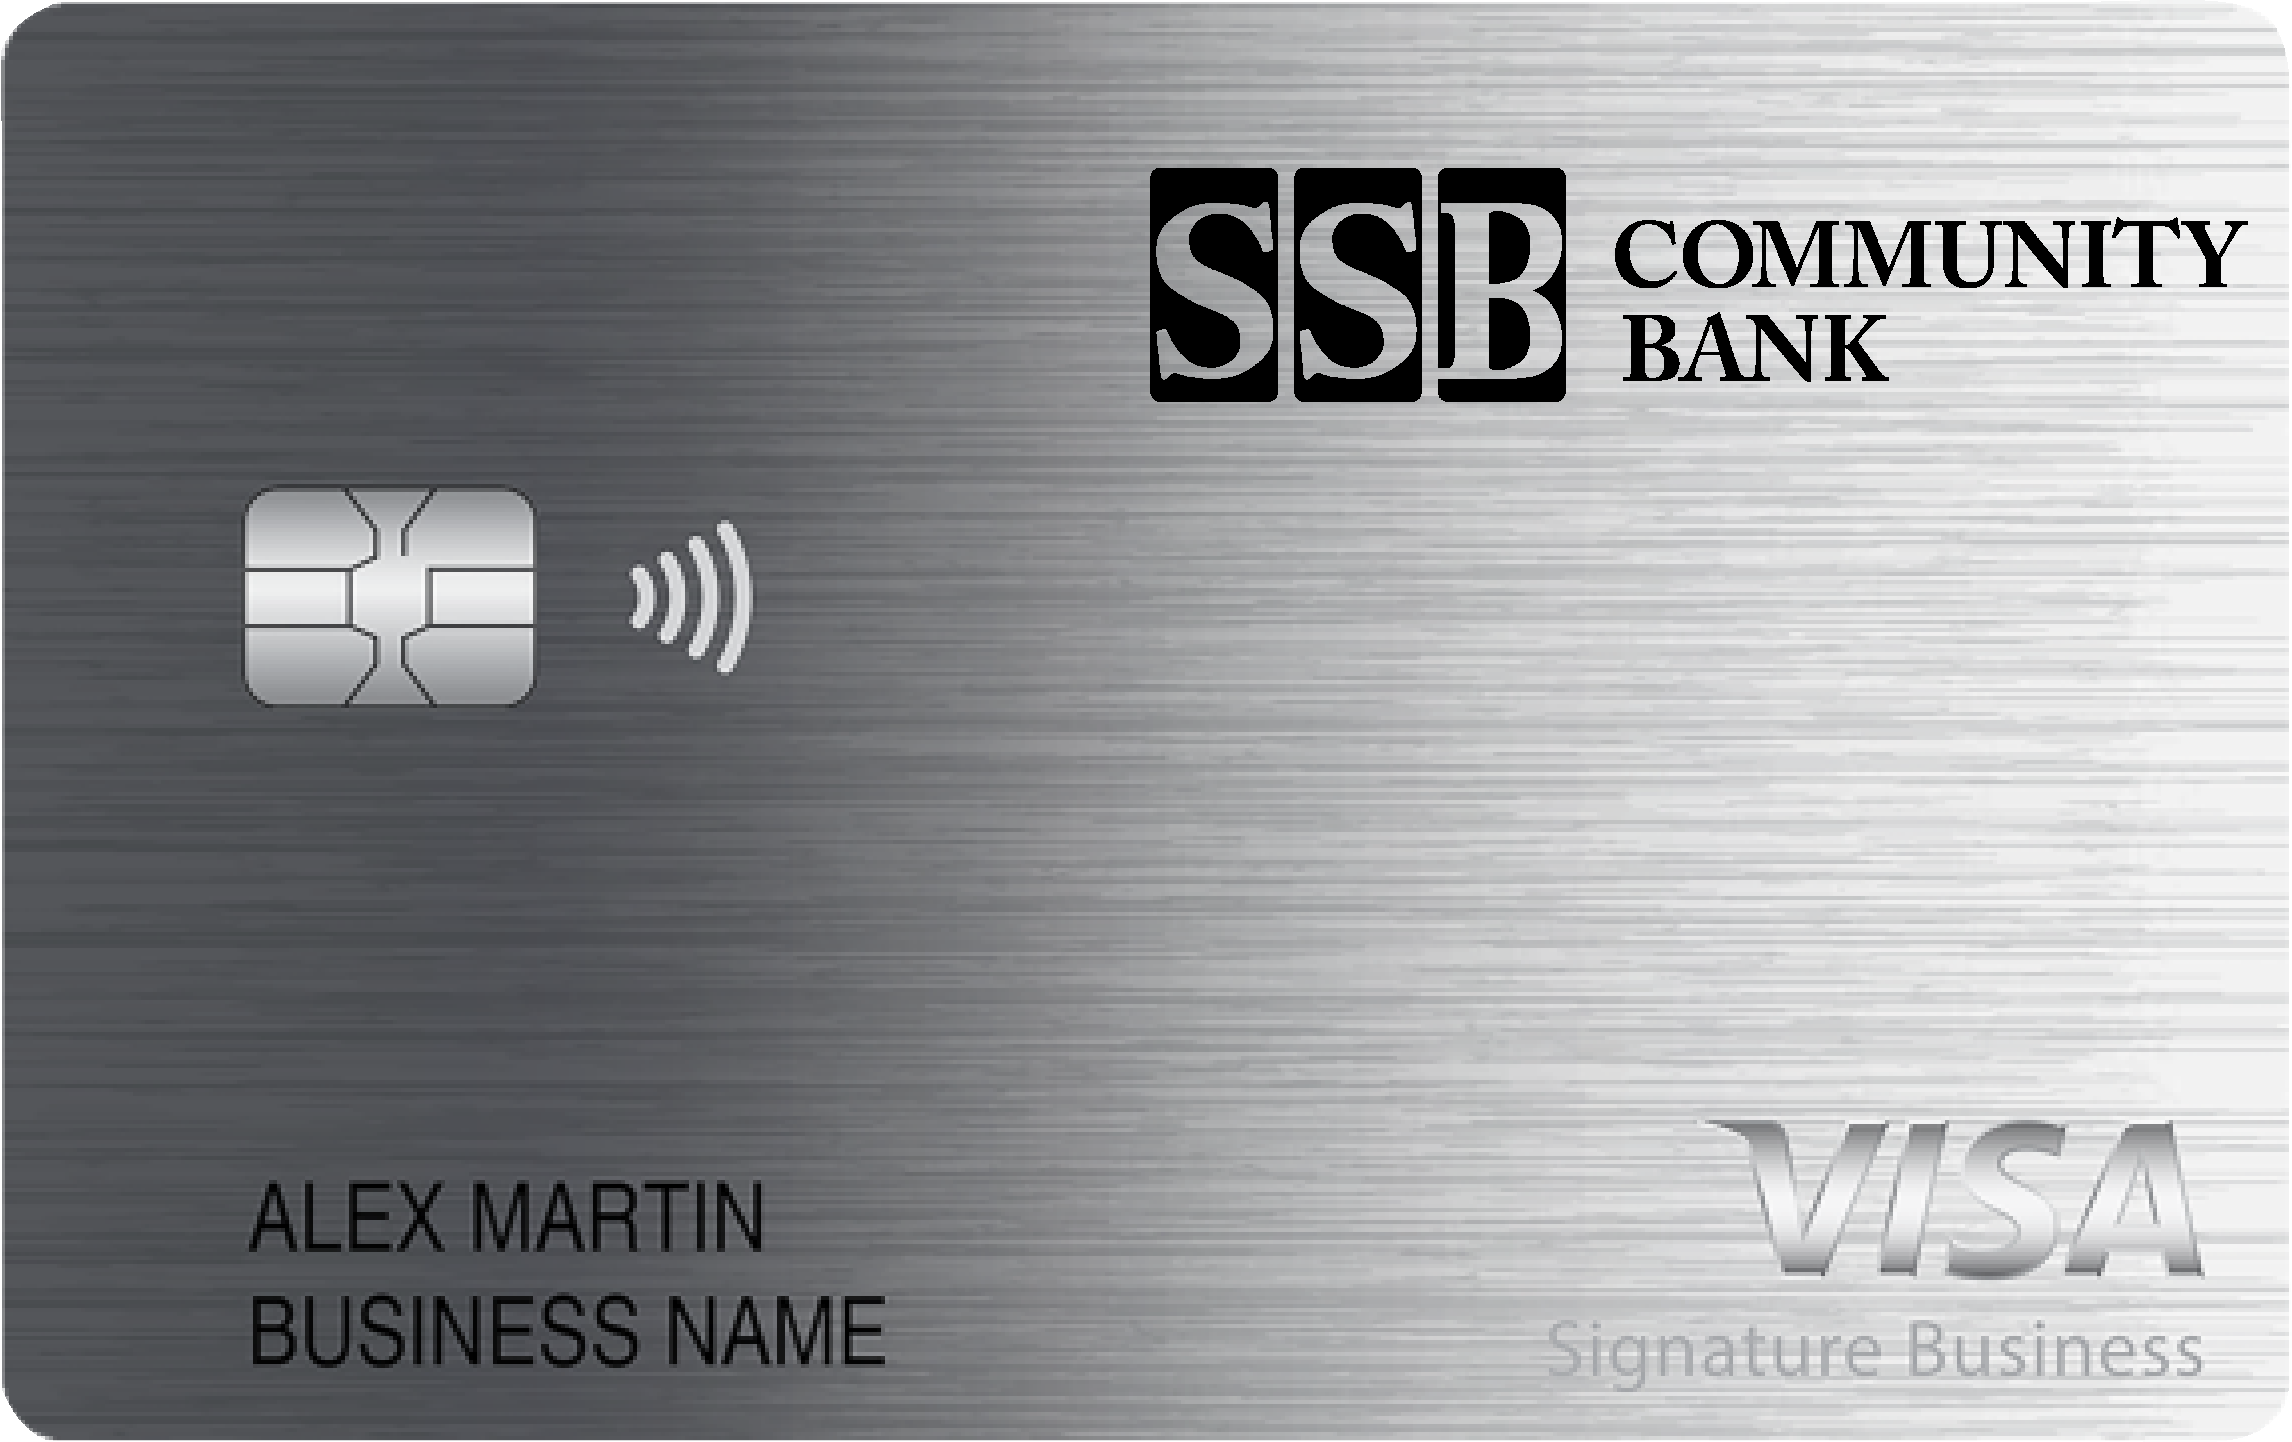 SSB Community Bank Smart Business Rewards Card